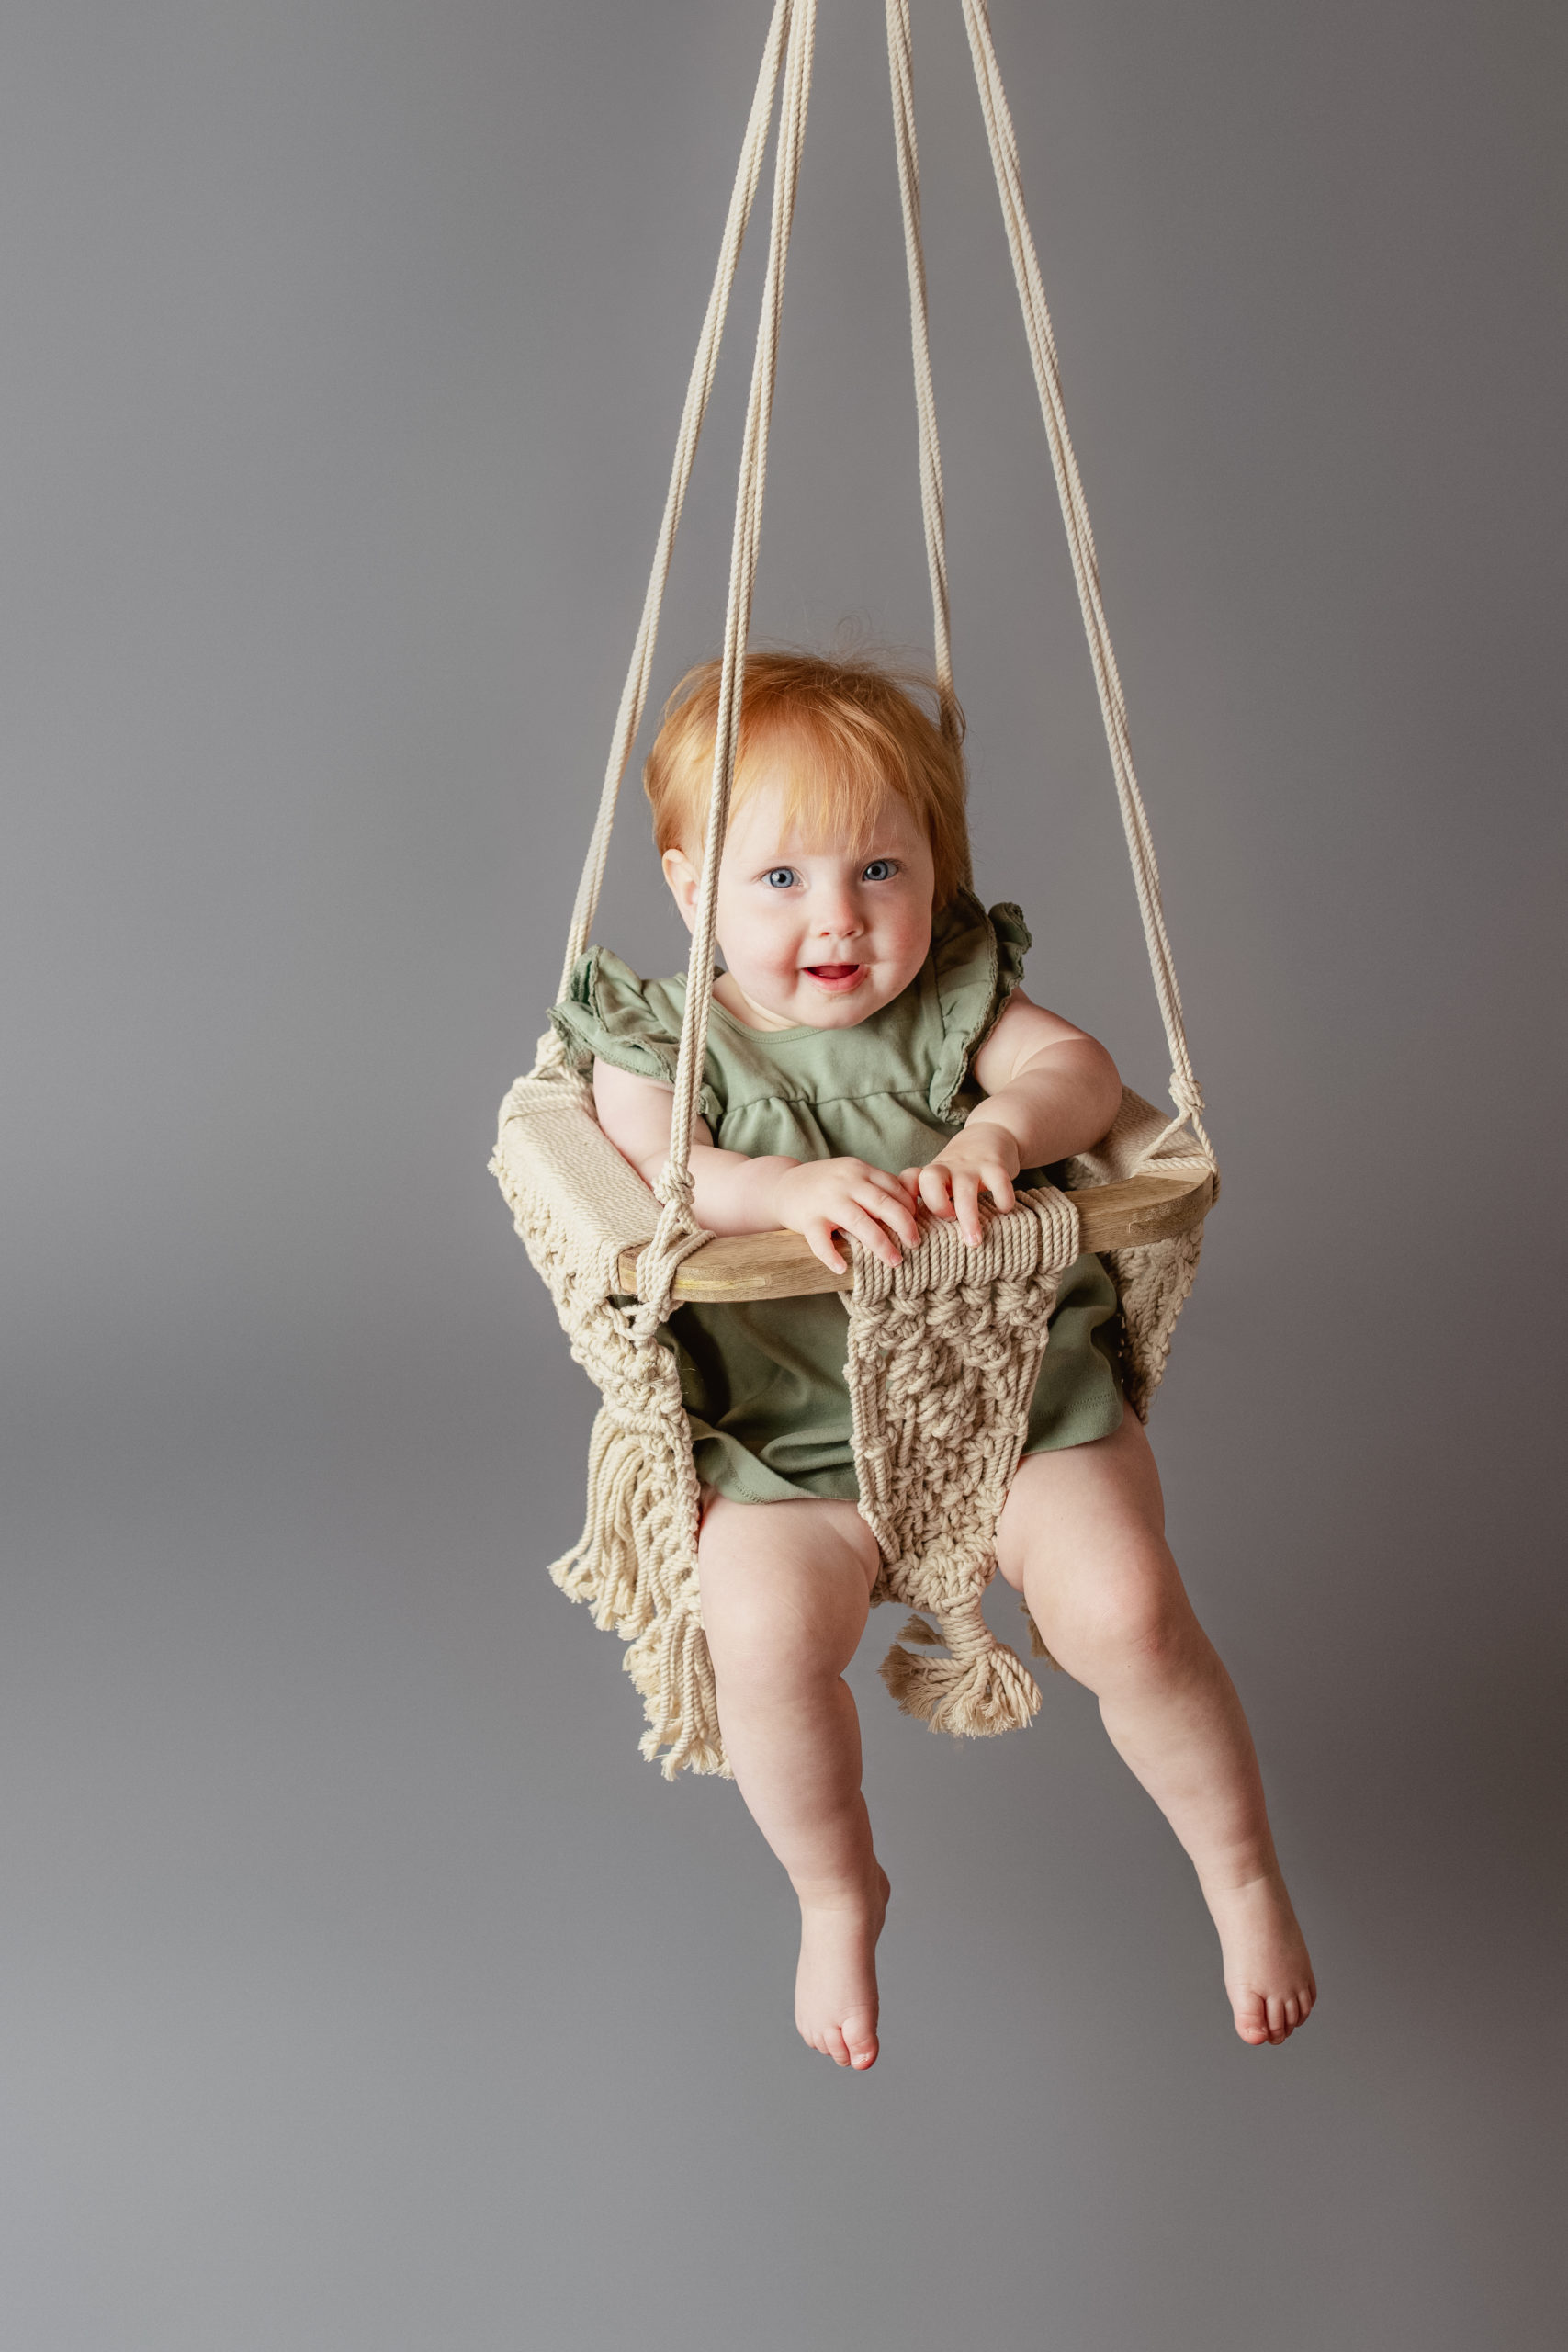 Baby swinging while wearing a dress from Goo Goo Gaa Gaa in Brookfield, WI